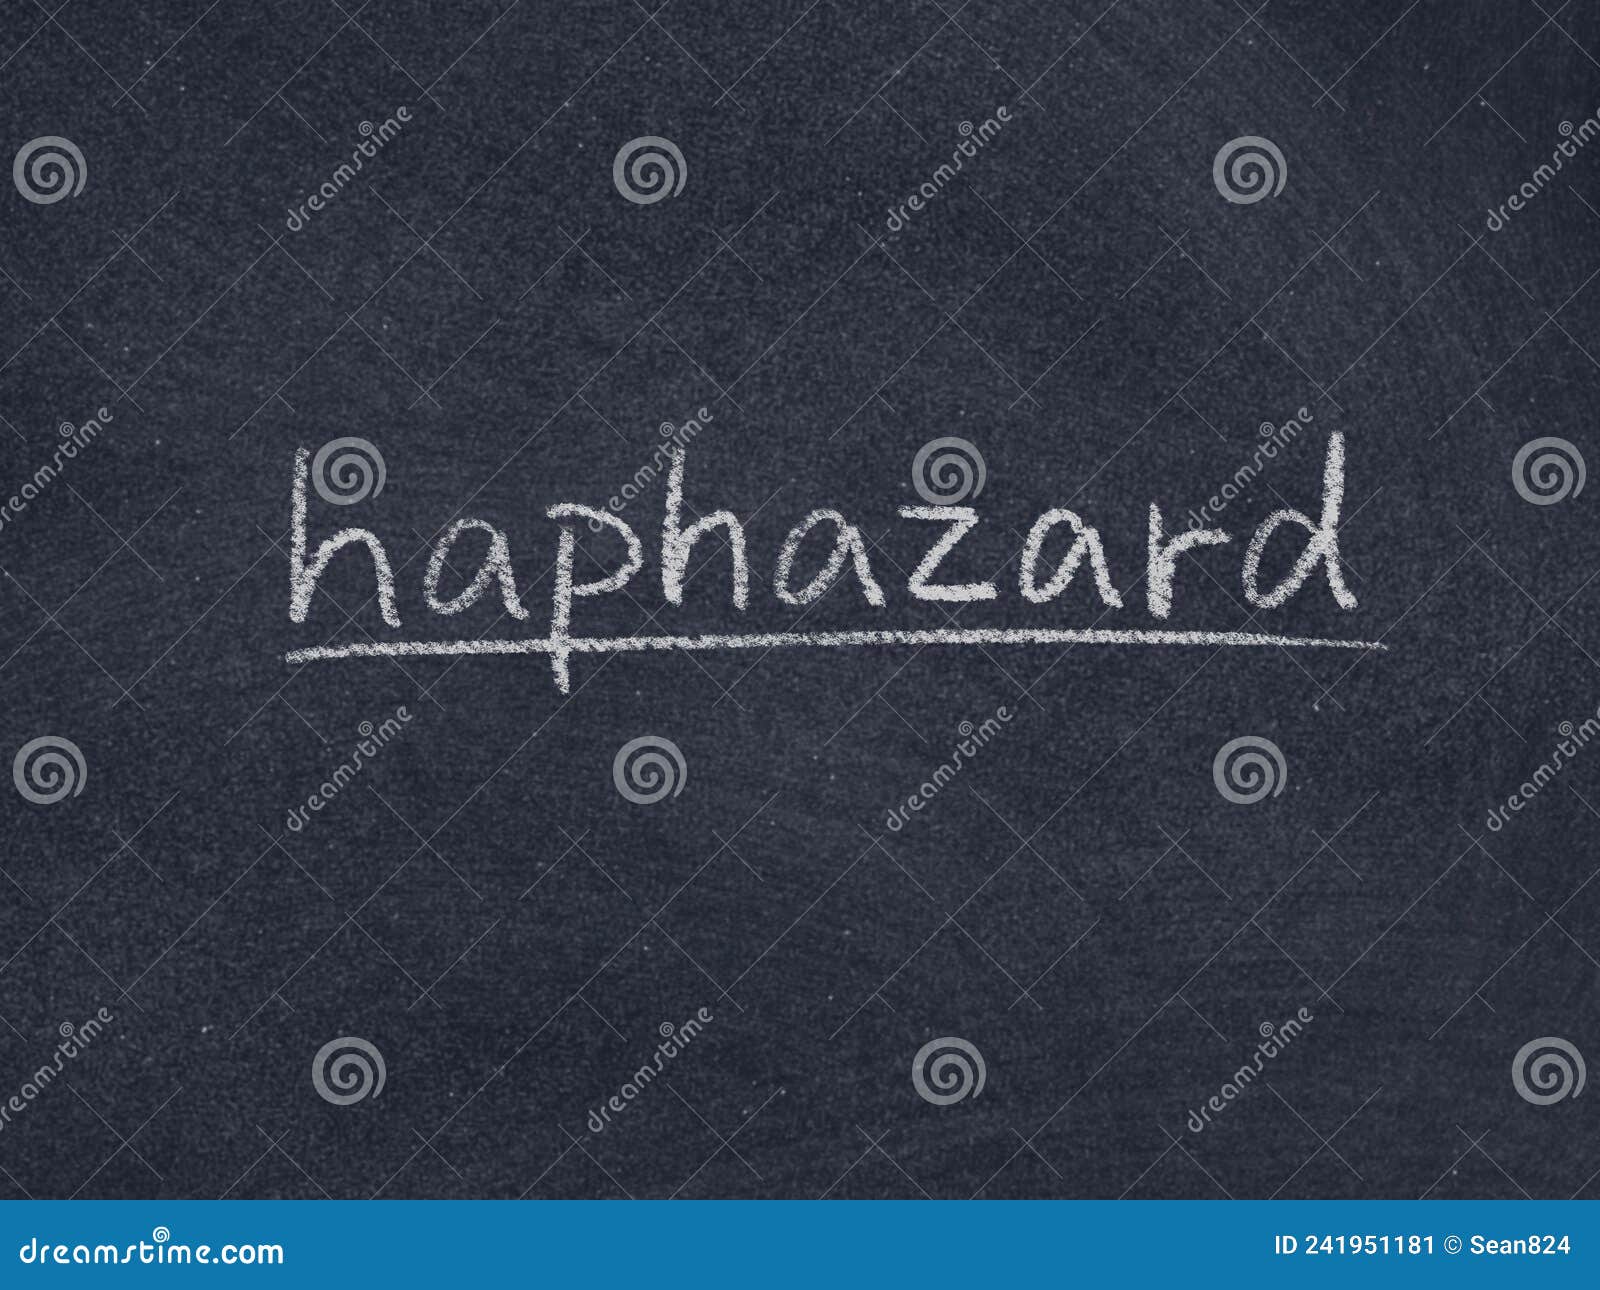 haphazard